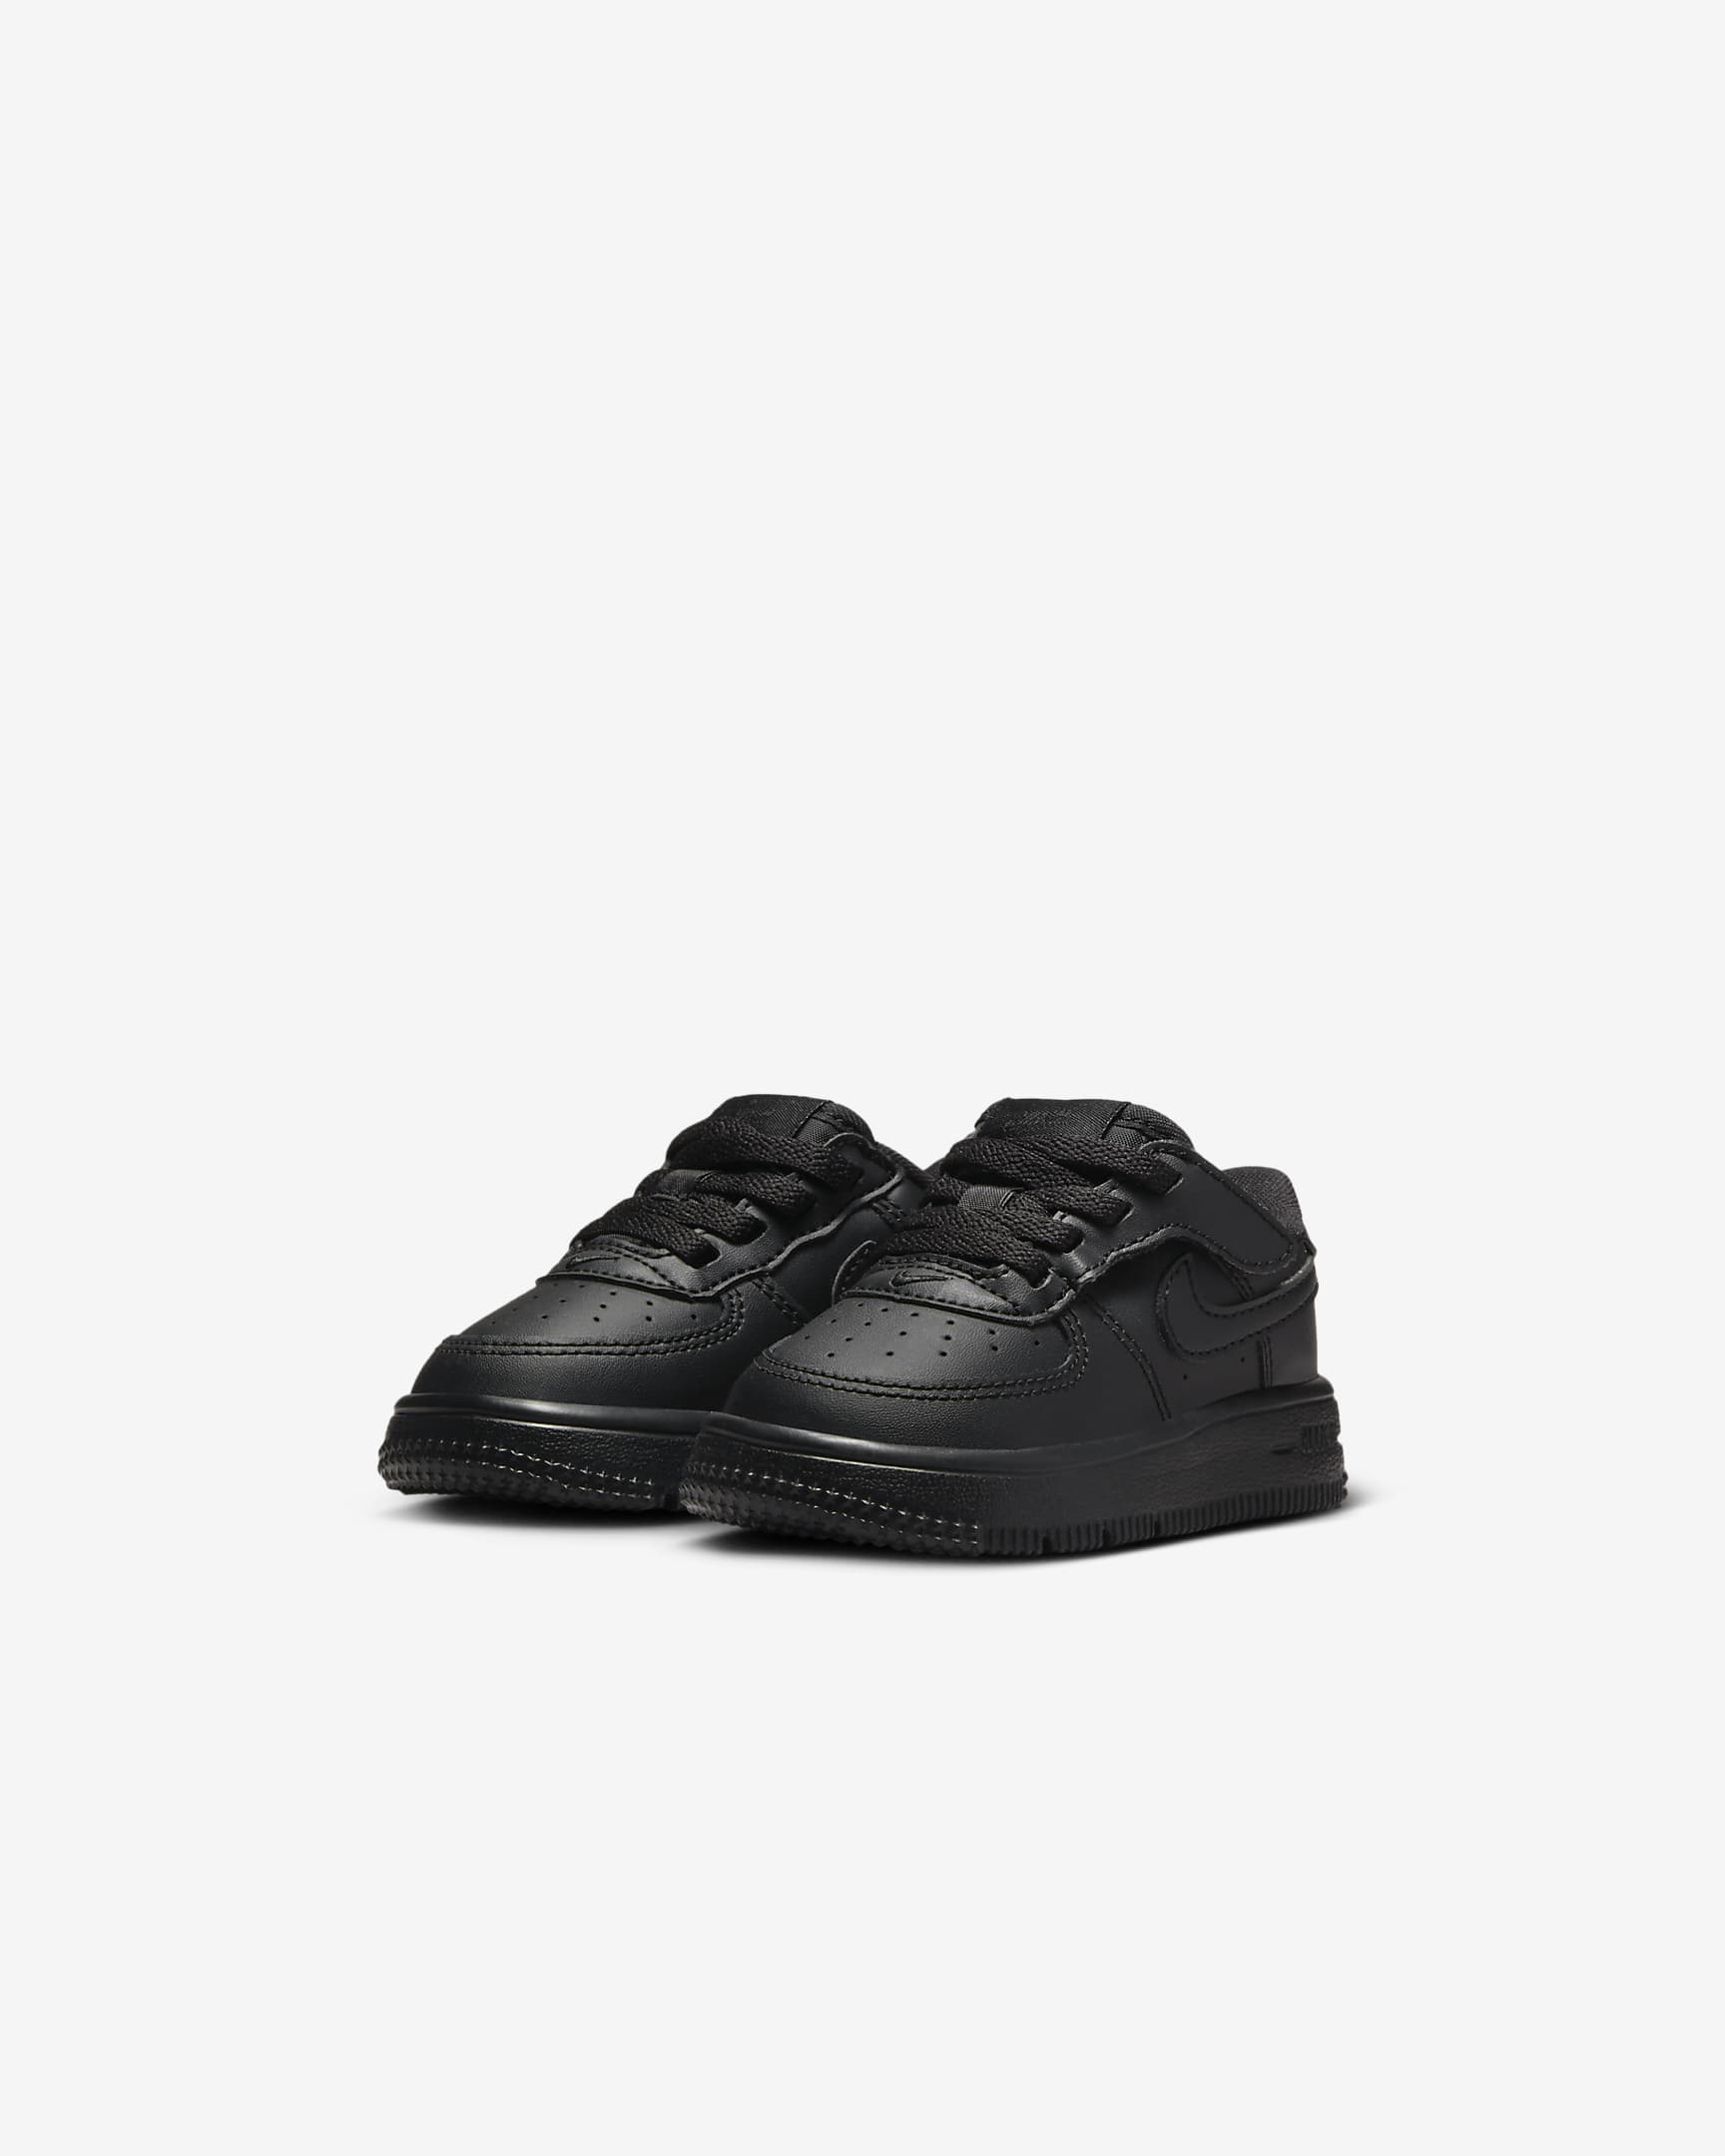 Nike Force 1 Low EasyOn Baby/Toddler Shoes - Black/Black/Black